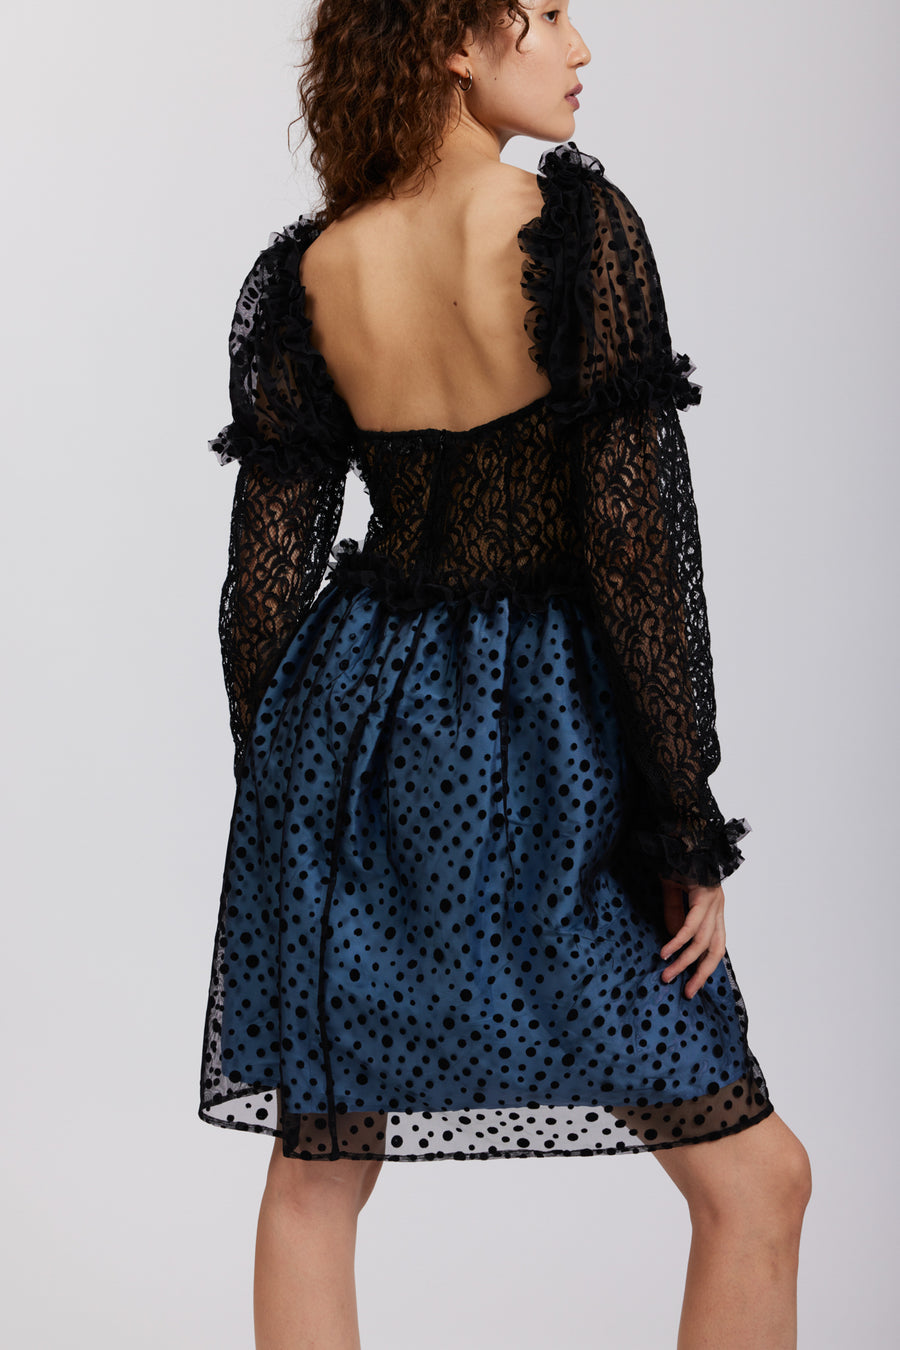 BATSHEVA - Sabrina Dress in Black Lace and Blue Taffeta